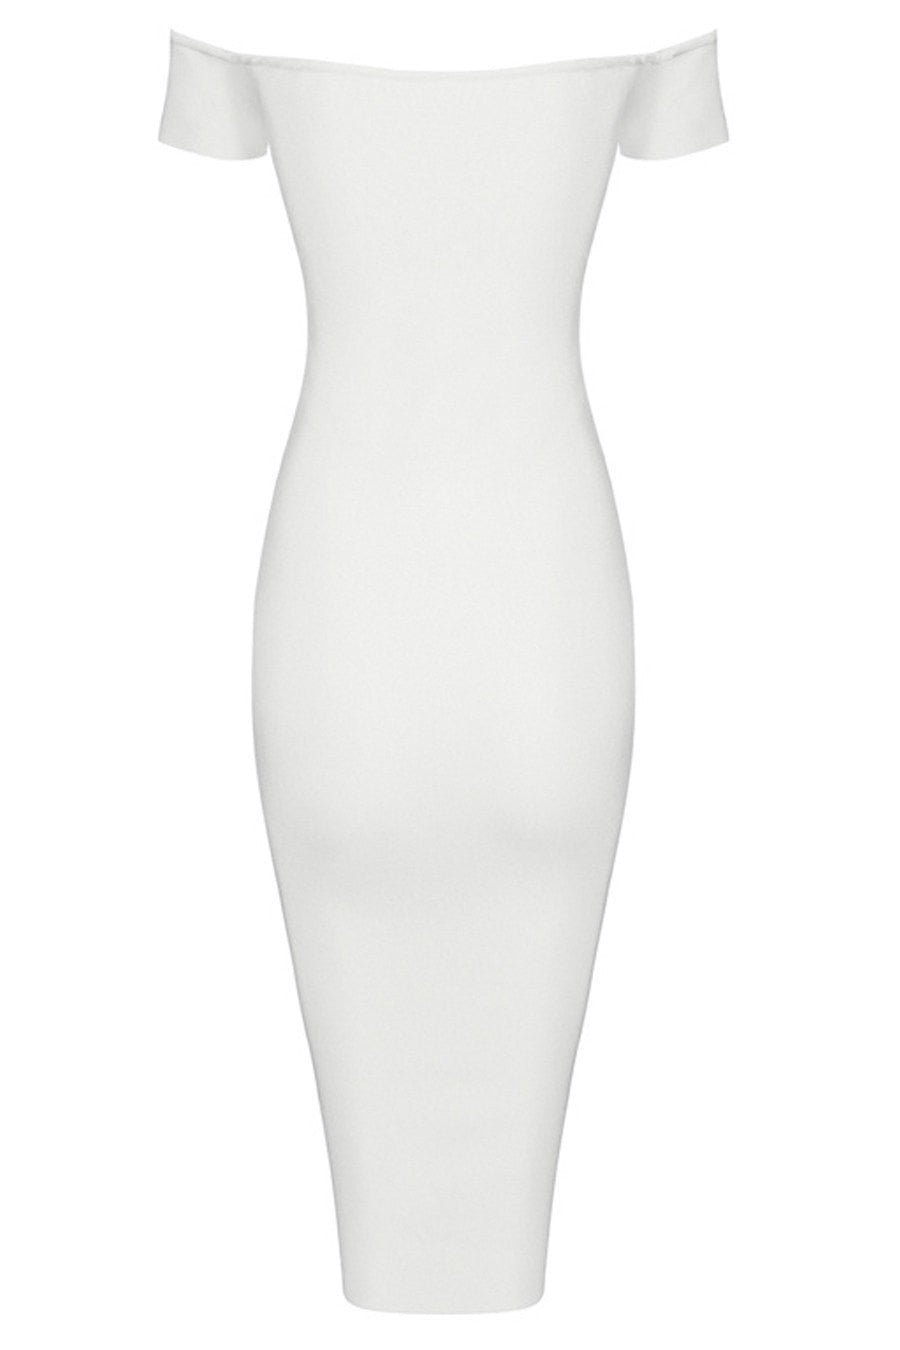 Honey Couture OLIVIA White Off Shoulder Bandage Midi Dress Honey Couture$ AfterPay Humm ZipPay LayBuy Sezzle